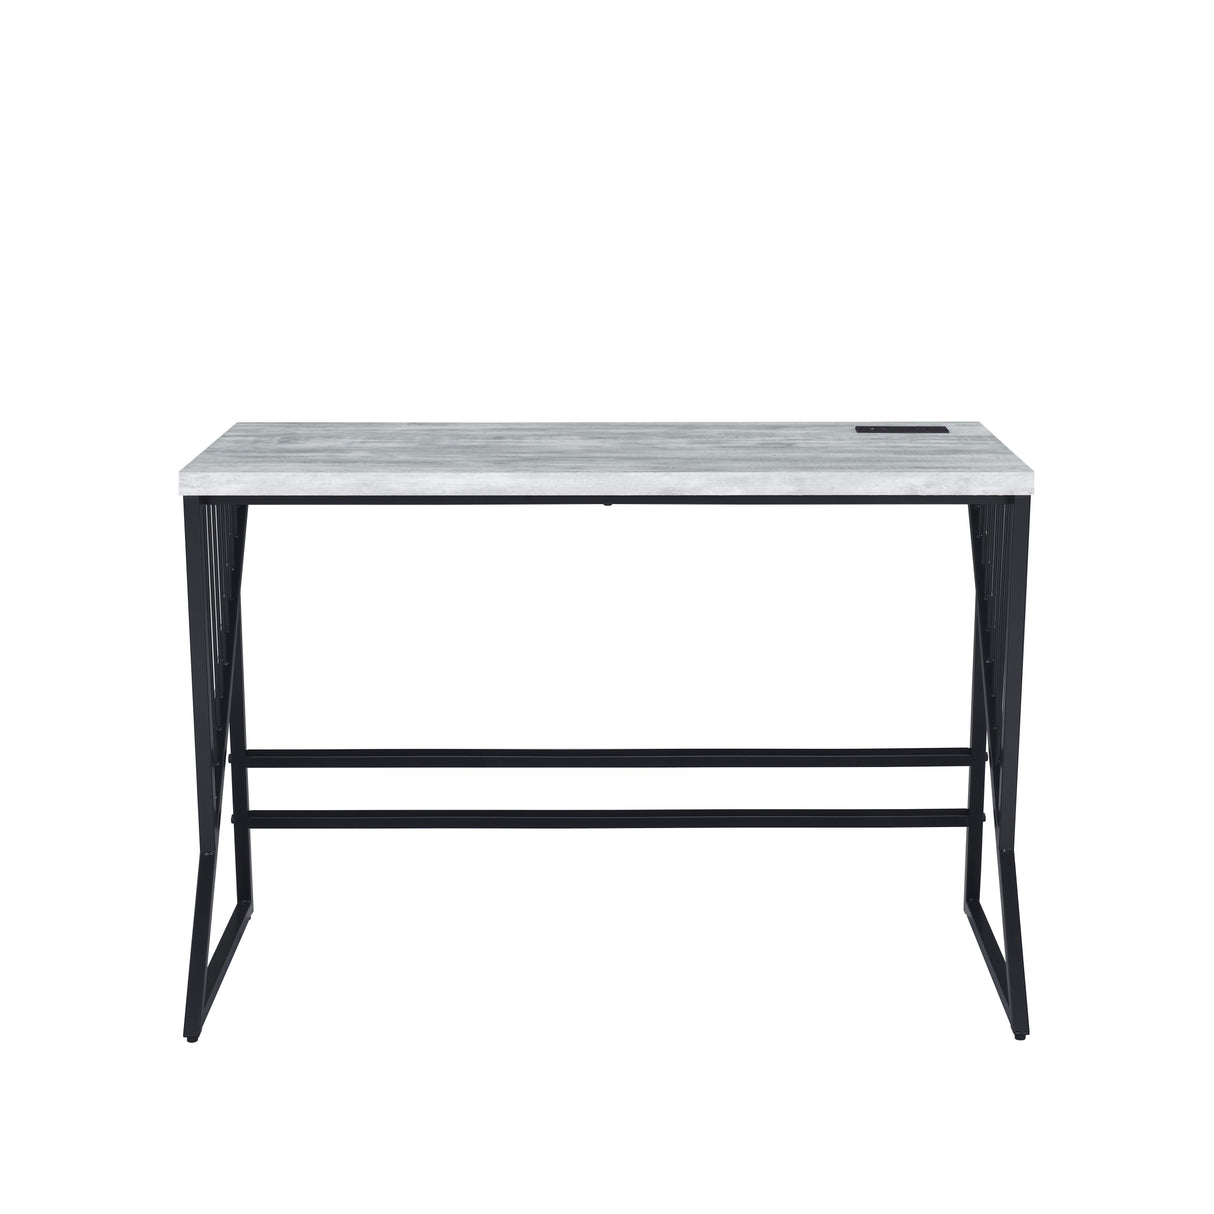 Collick - Writing Desk - Weathered Gray & Black Finish